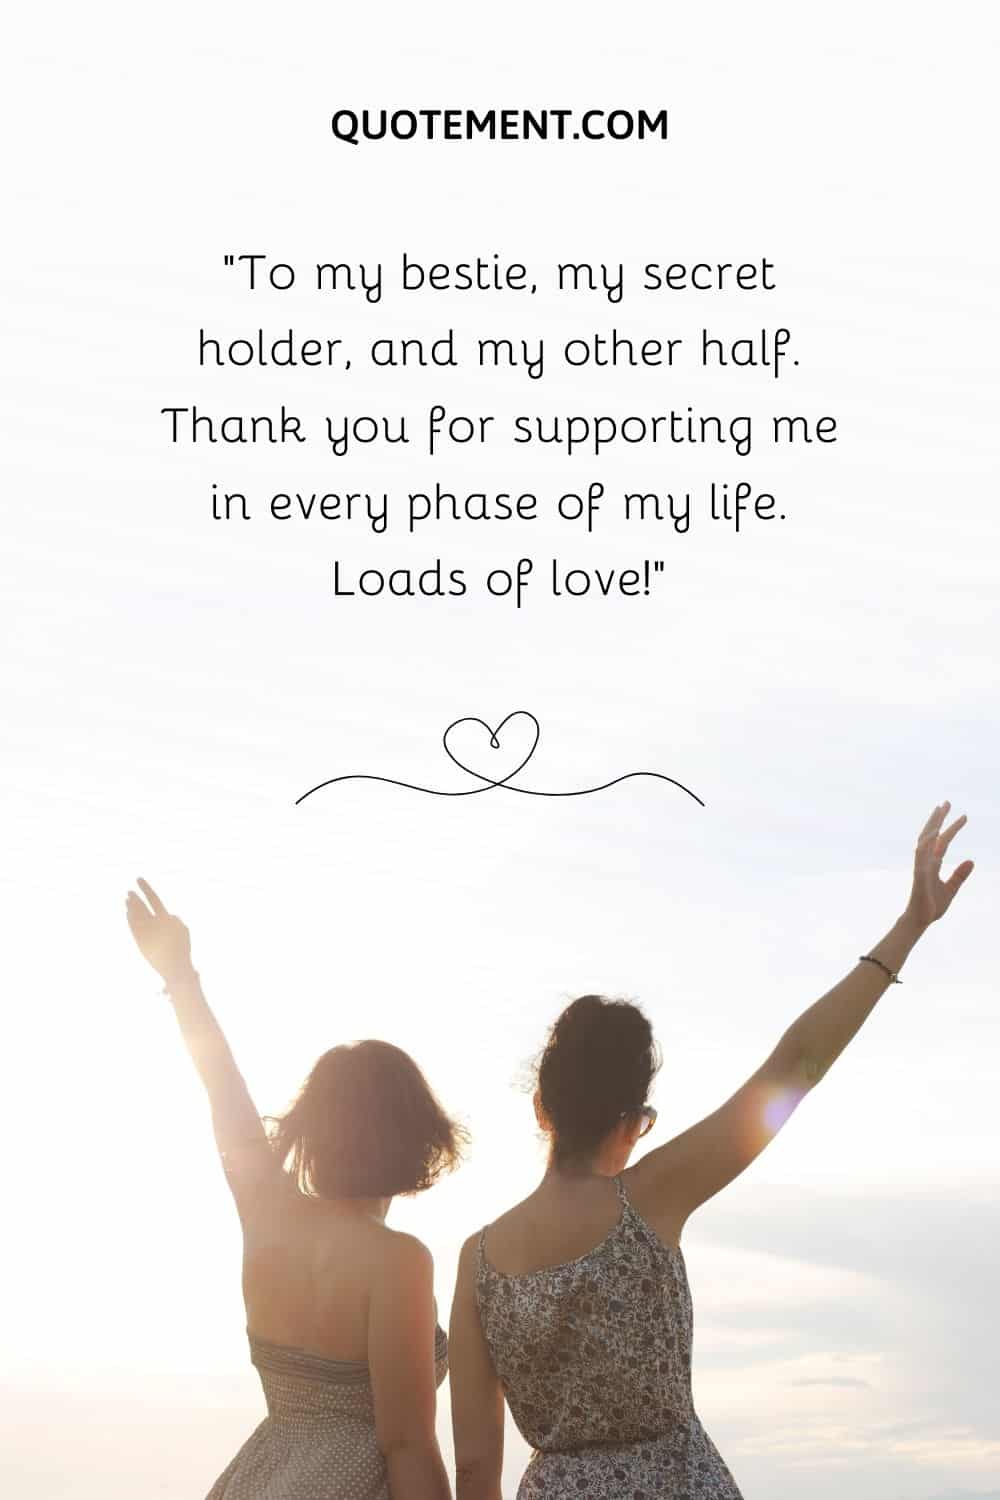 To my bestie, my secret holder, and my other half.